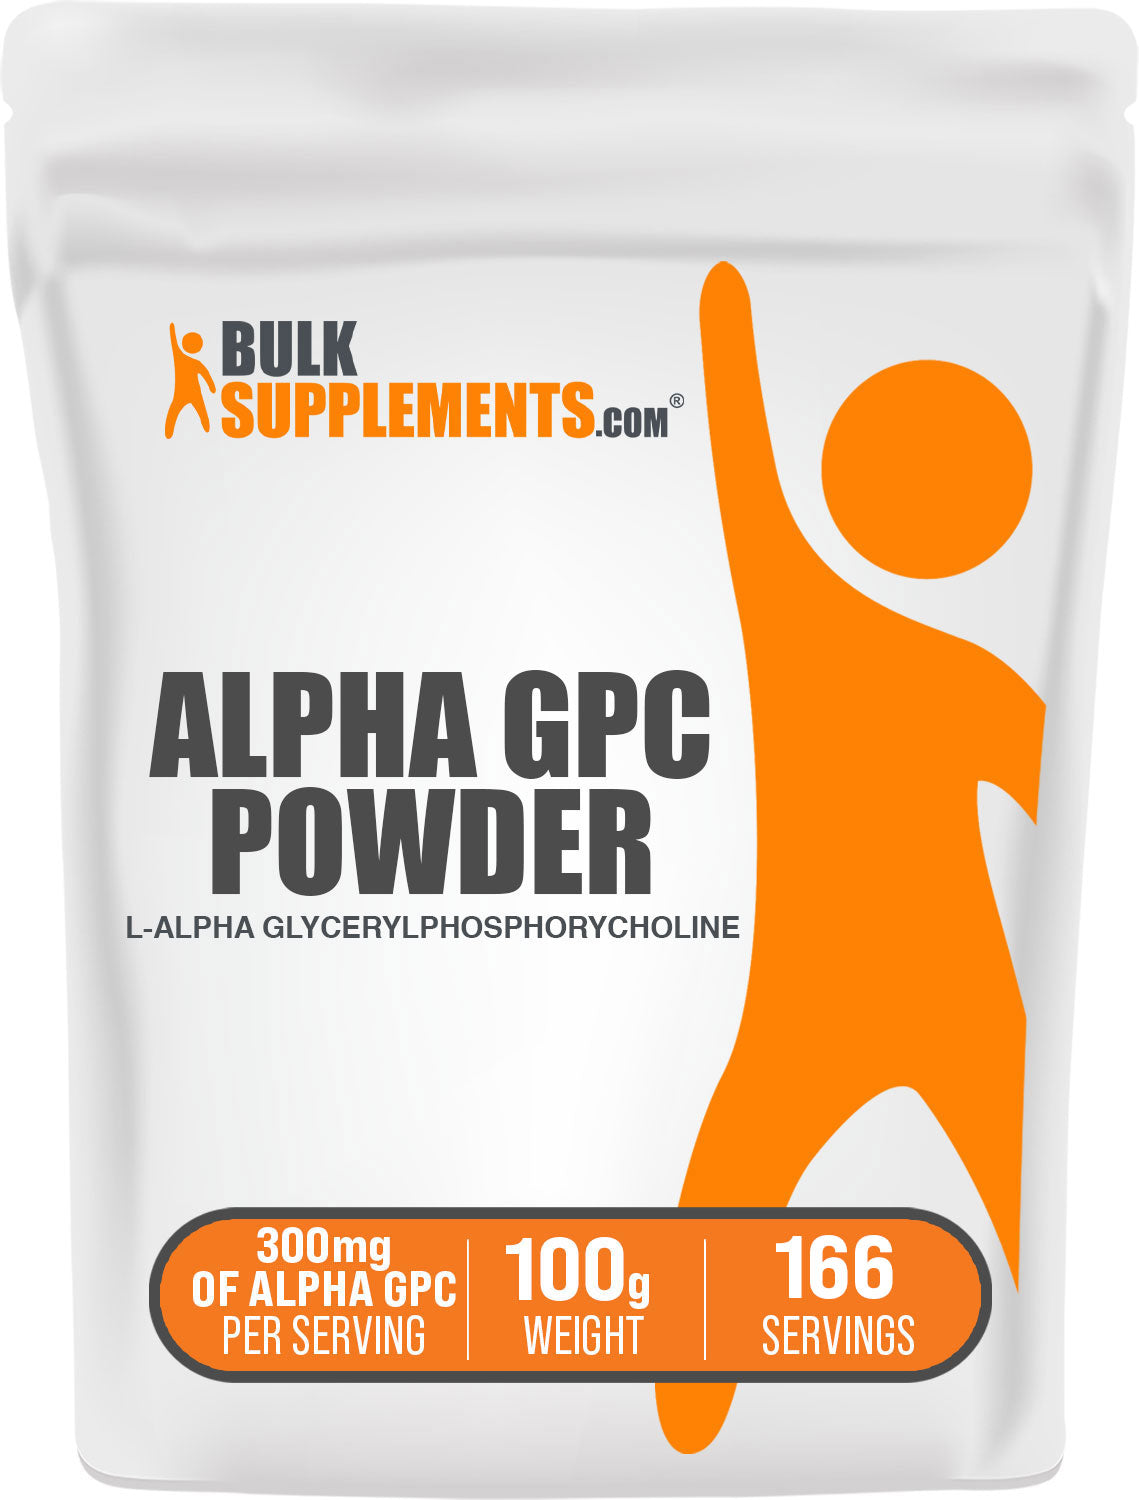 BulkSupplements.com Alpha GPC powder 100g bag image